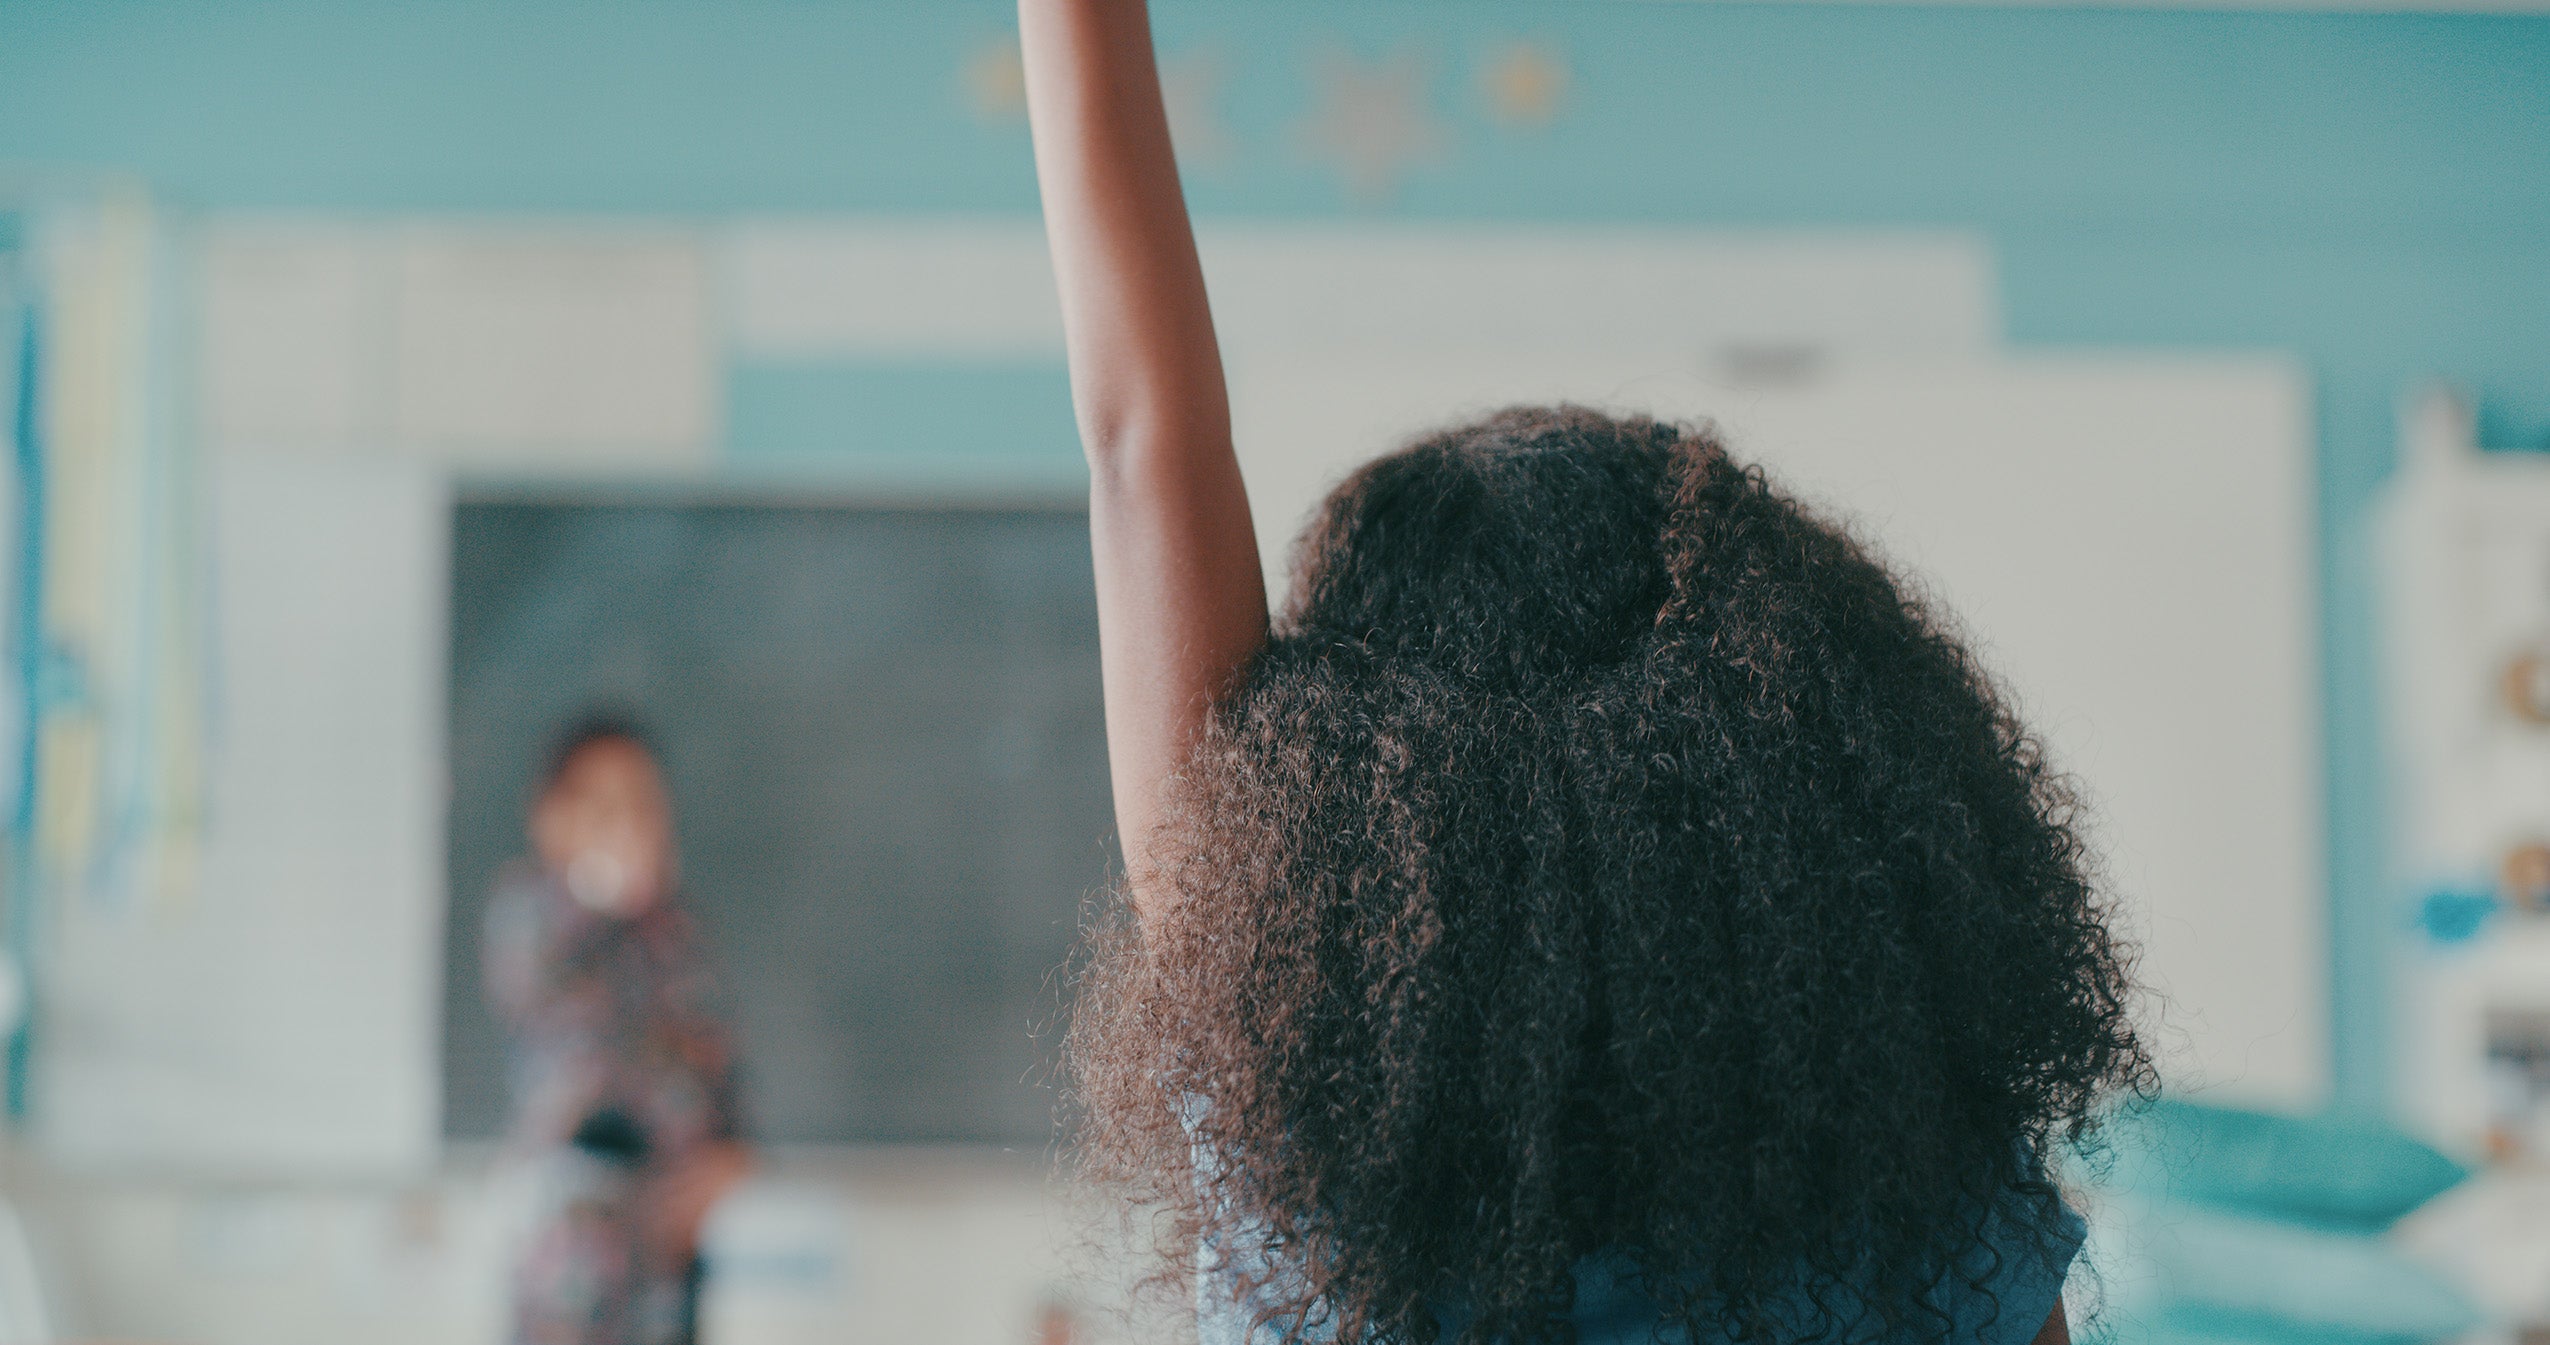 A girl enthusiastically raises her hand in a classroom.